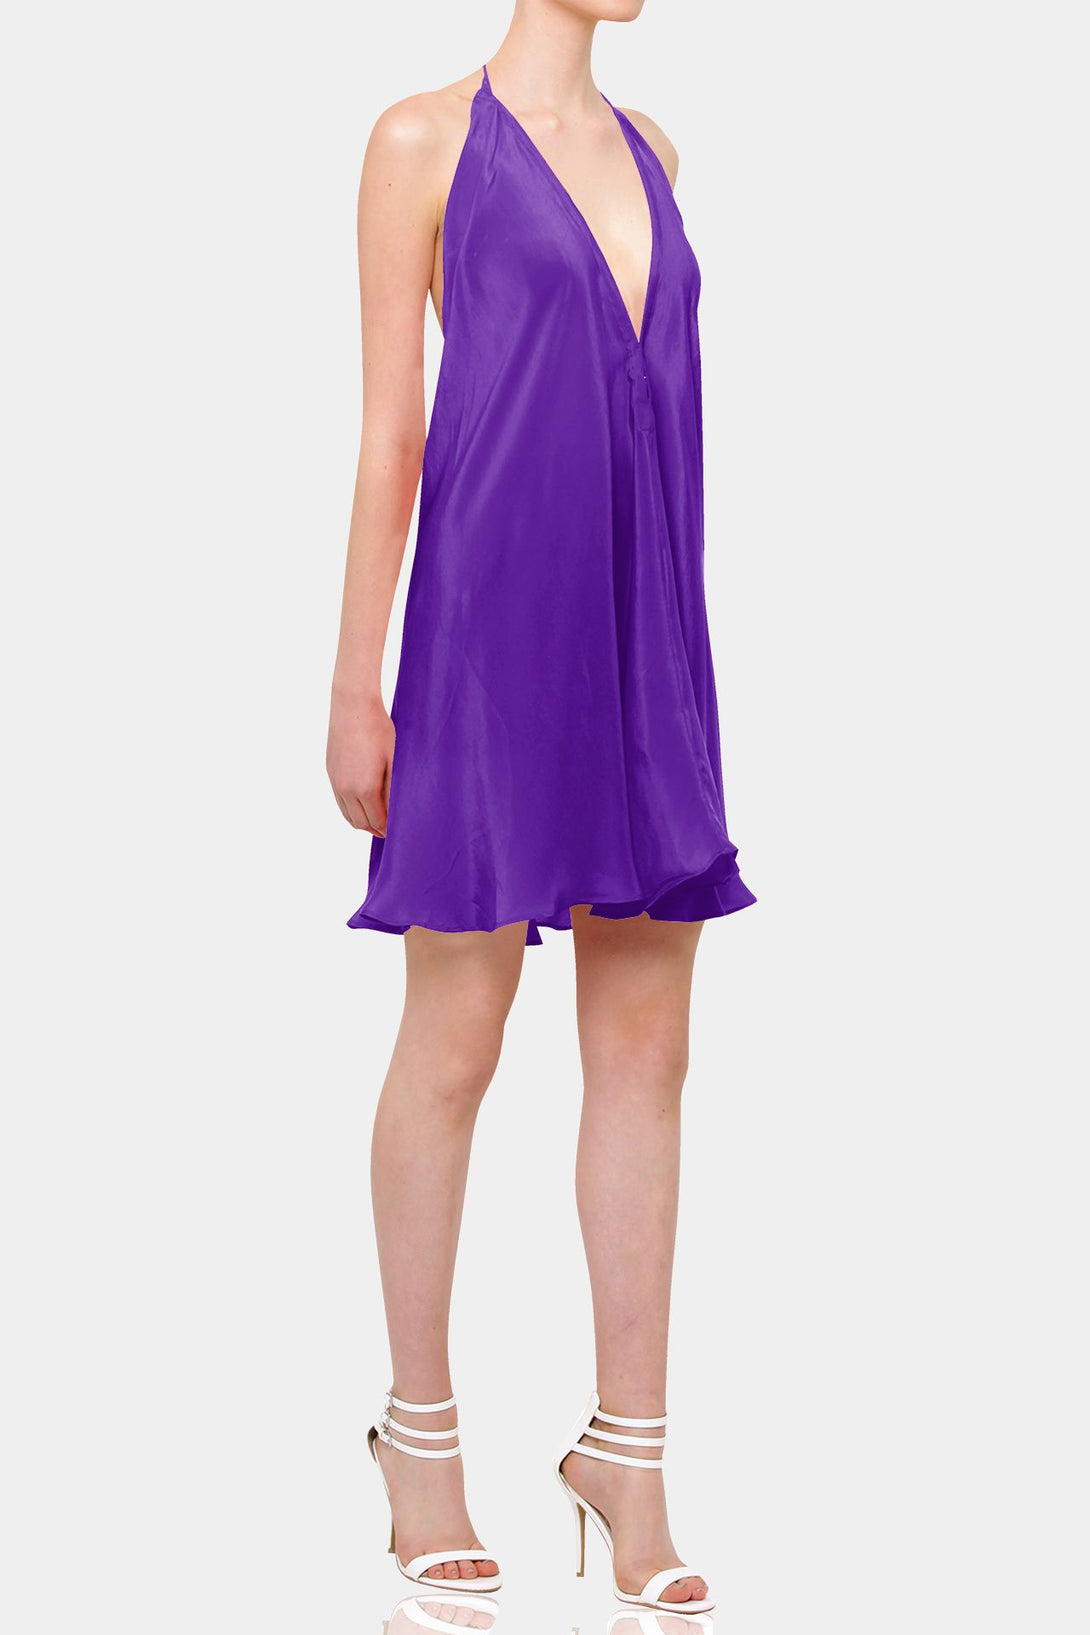  dark purple short dress, mini frock for women, plus size short dresses, Shahida Parides,